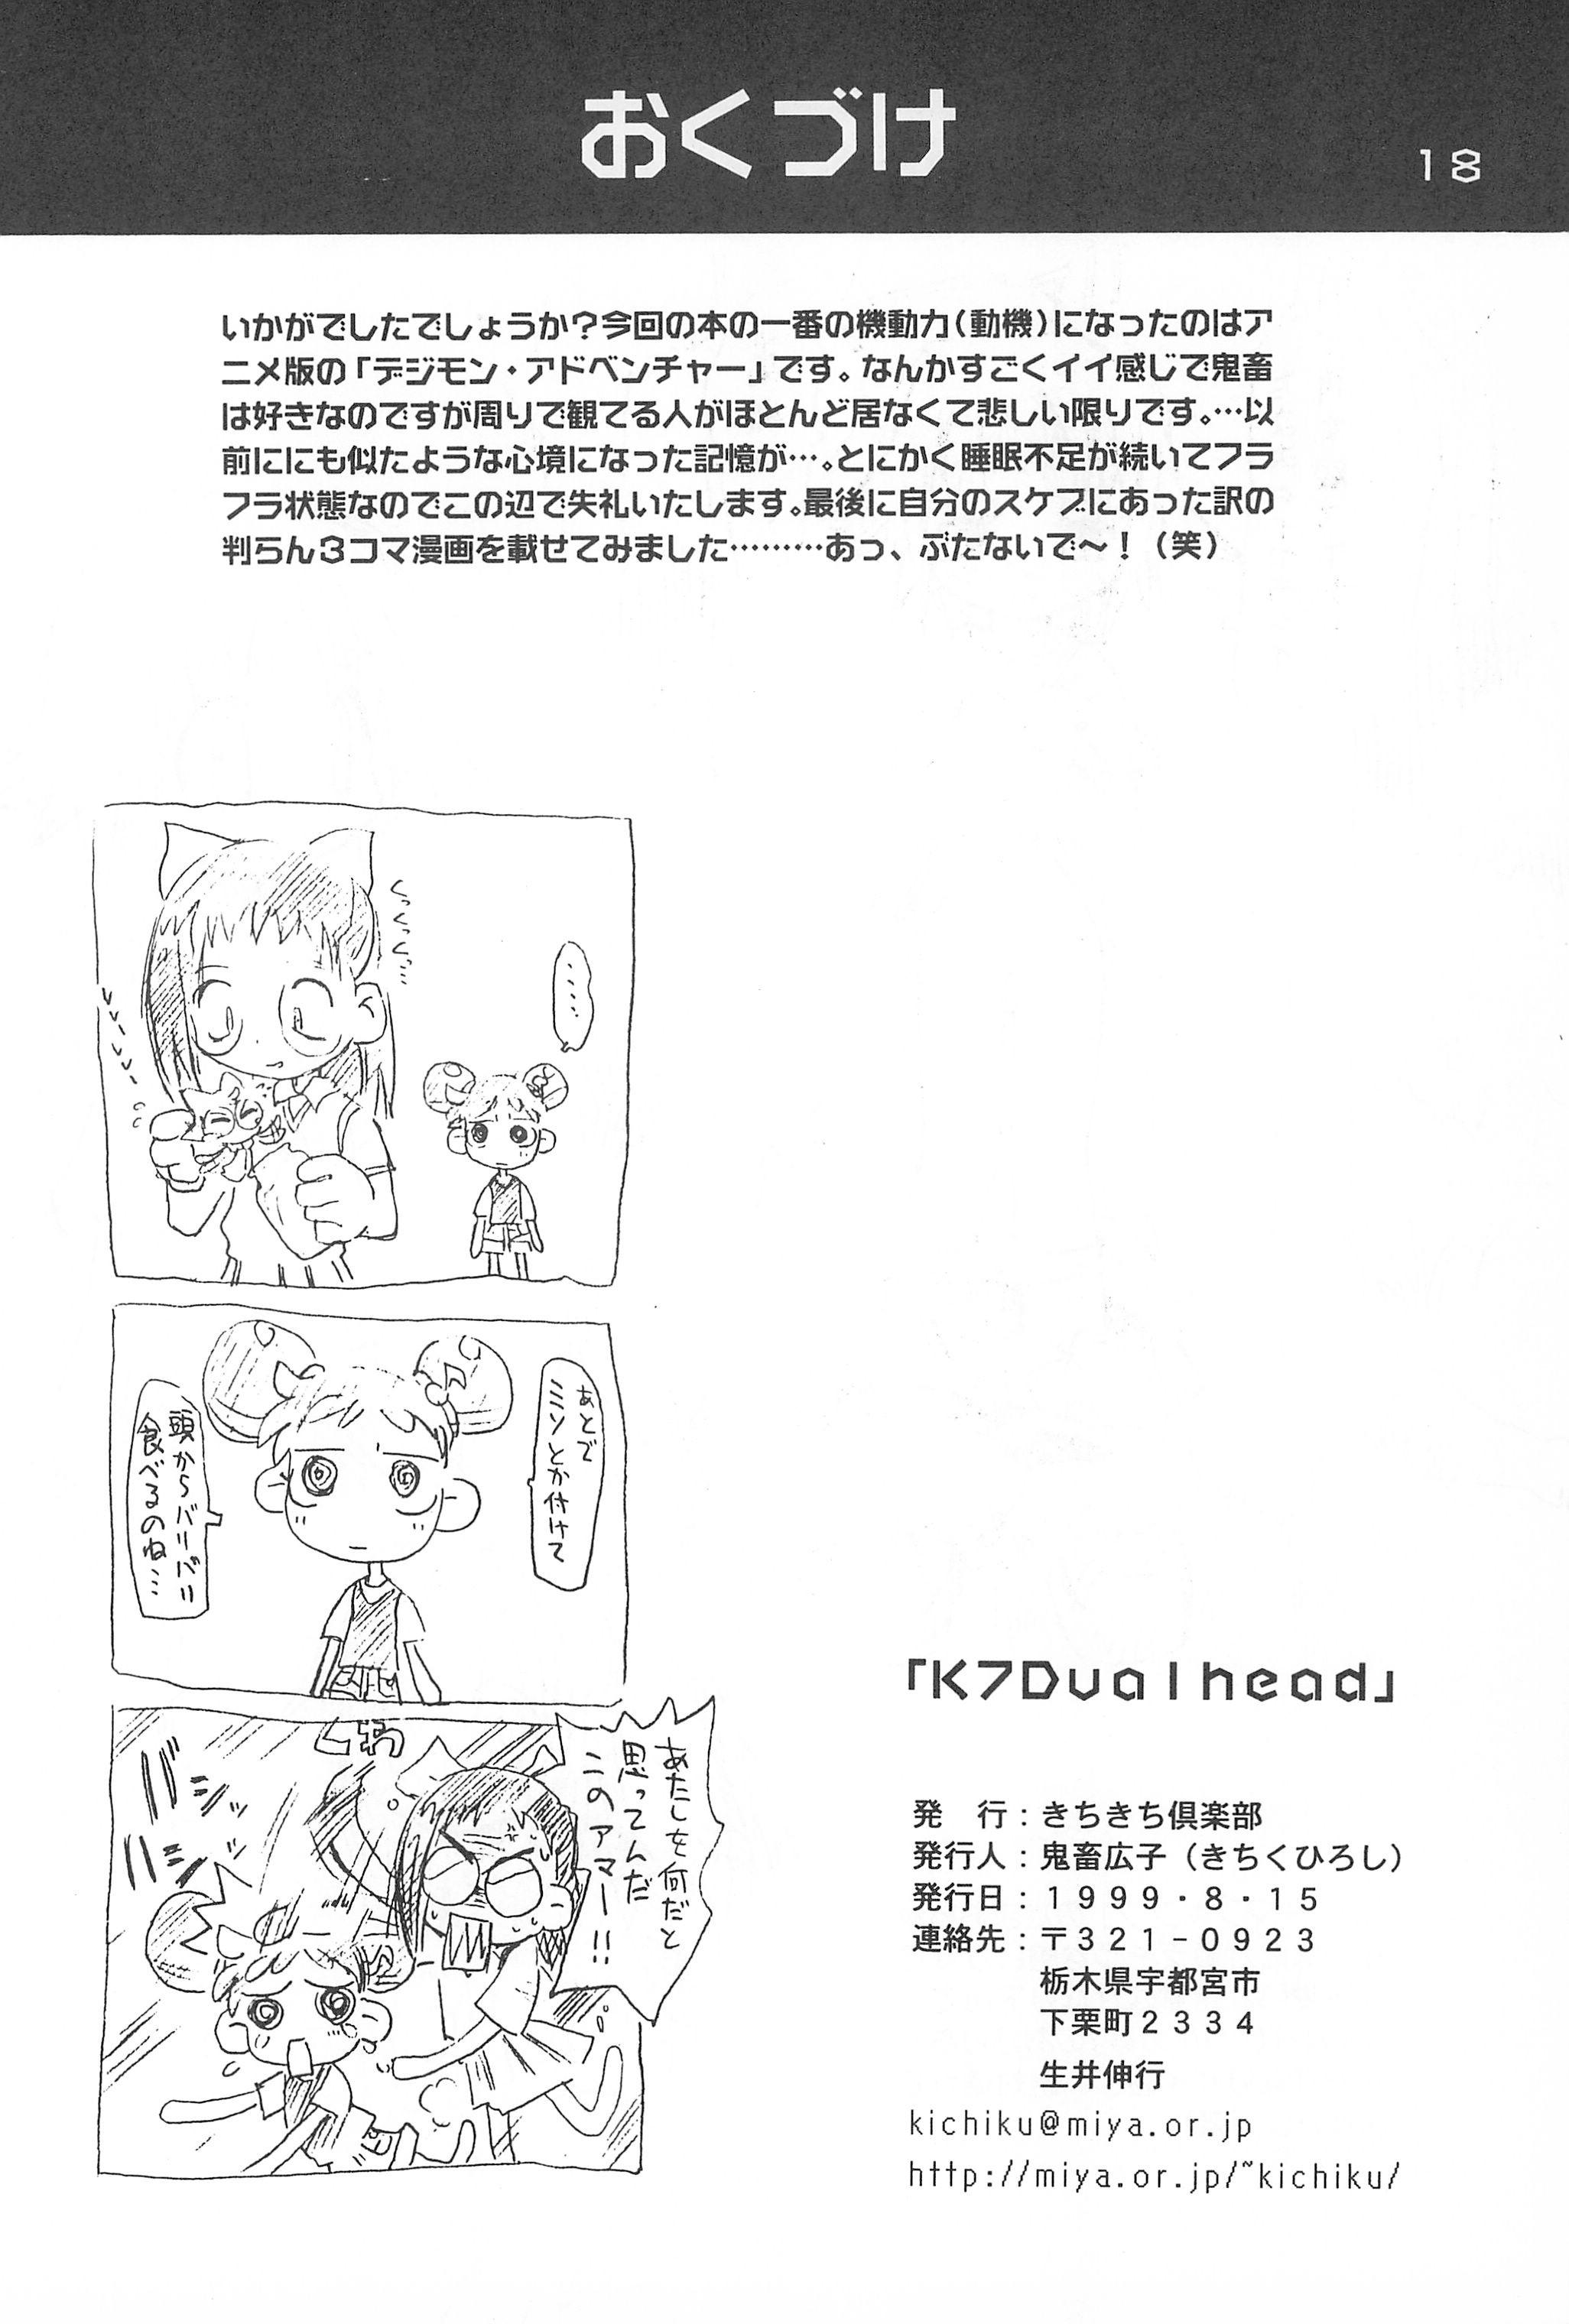 Kichiku Book 7 Dual Head 17